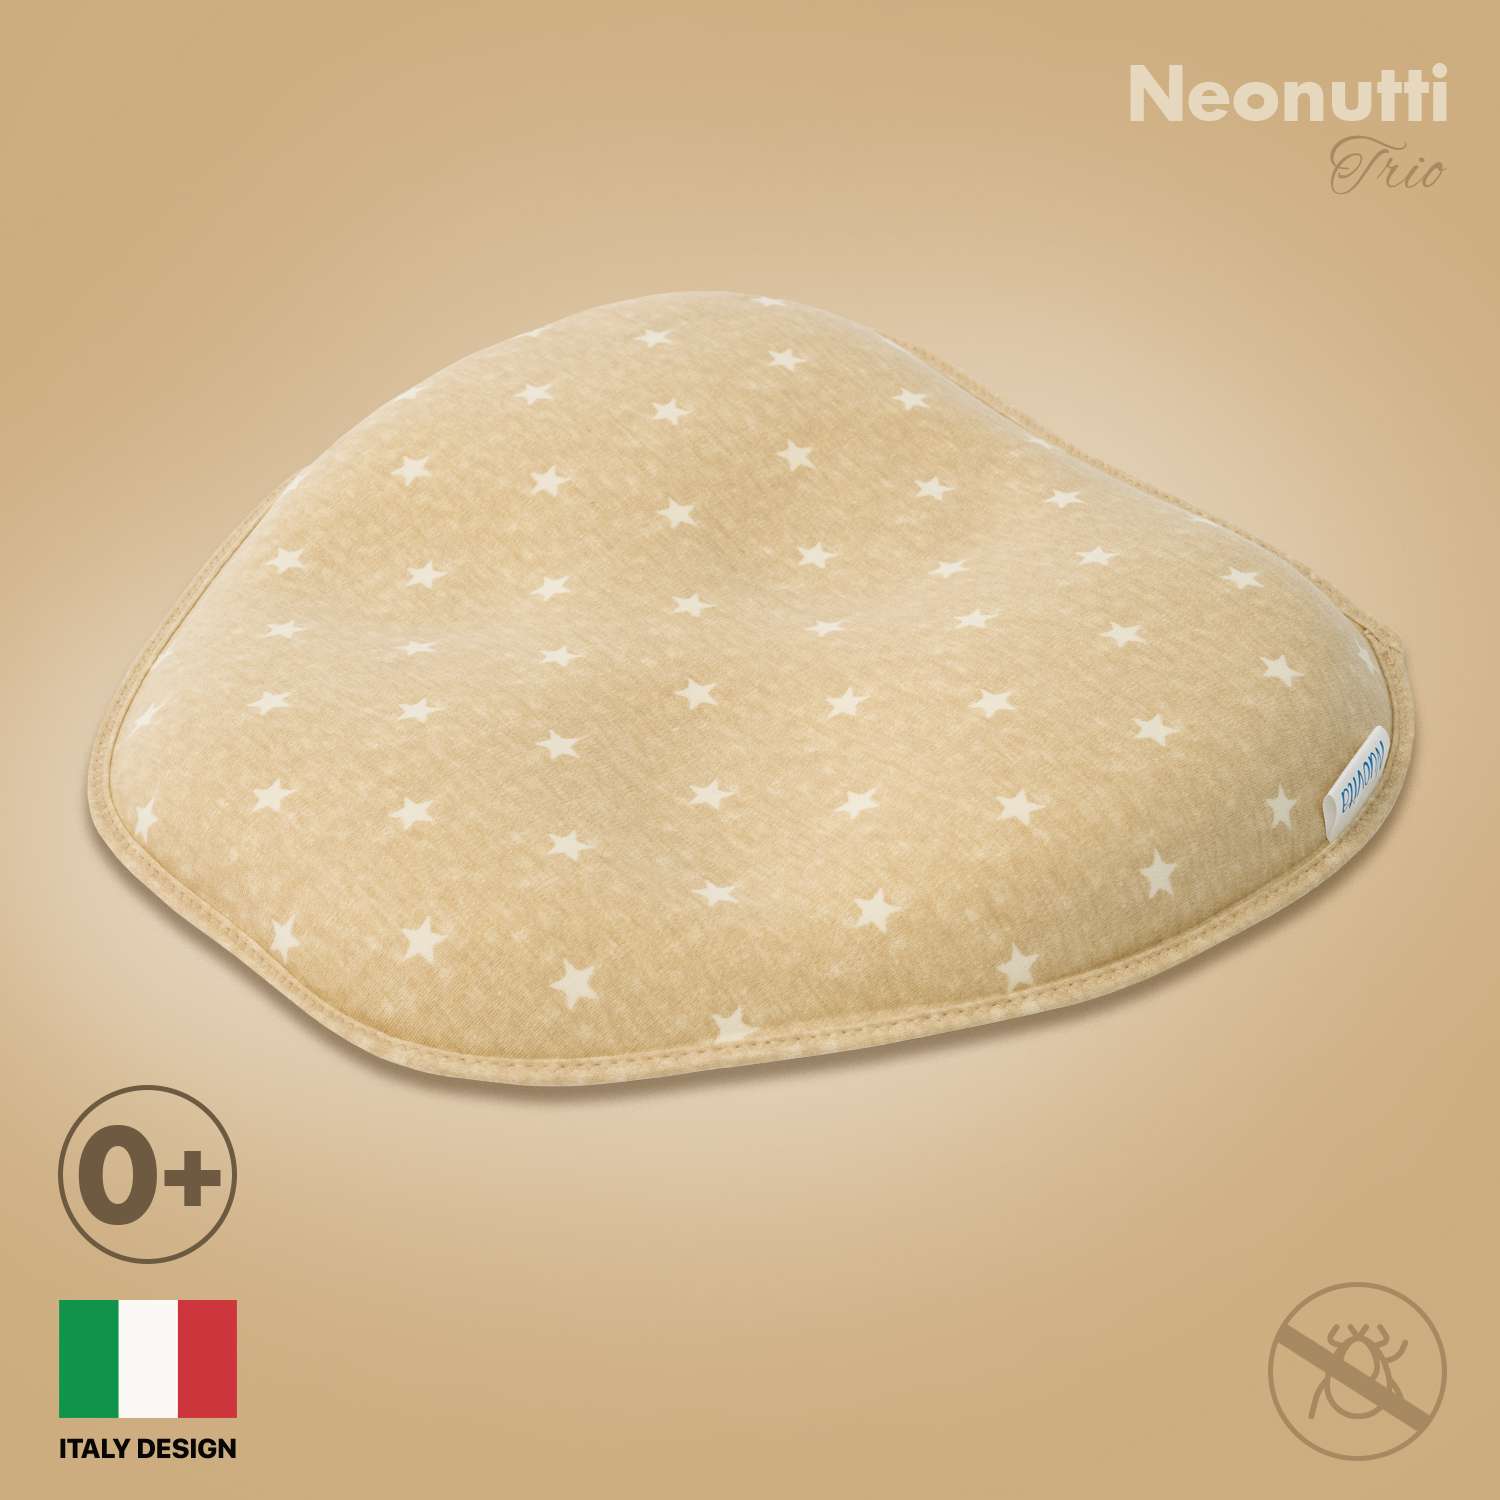 Подушка для новорожденного Nuovita Neonutti Trio Dipinto Песочная - фото 2